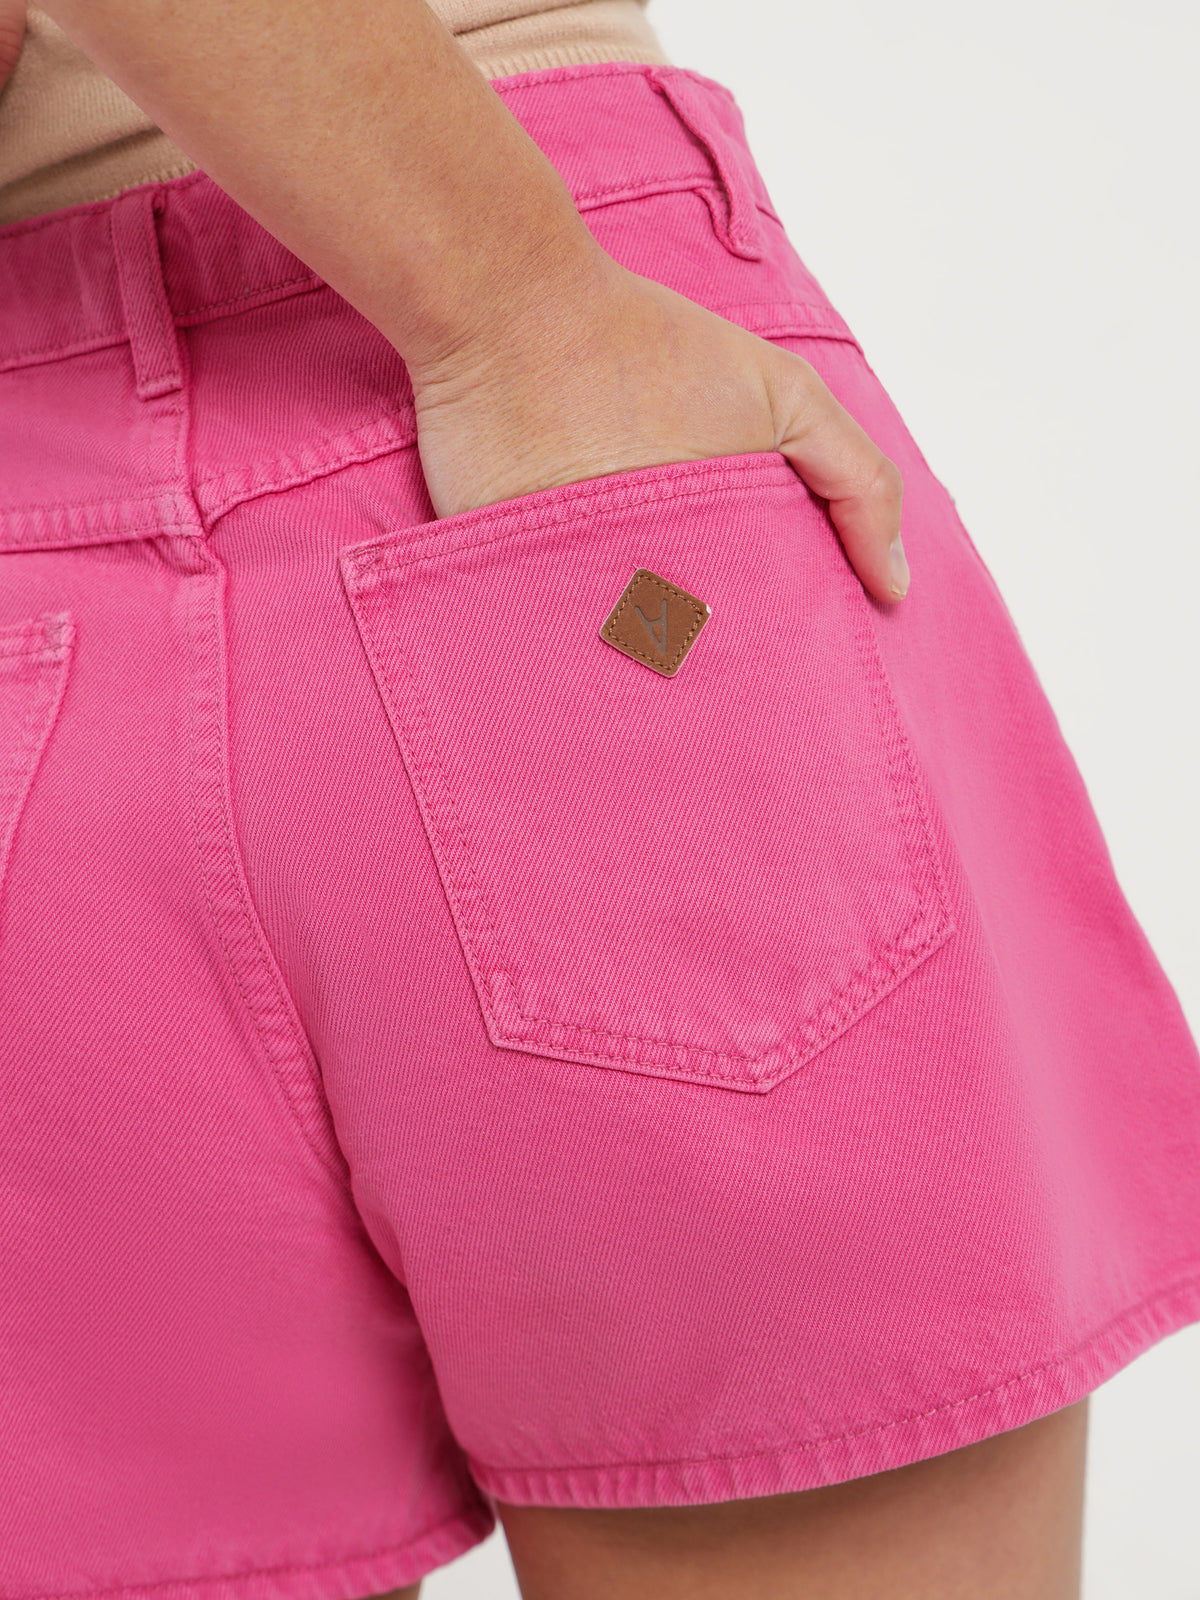 A Venice Shorts in Super Pink